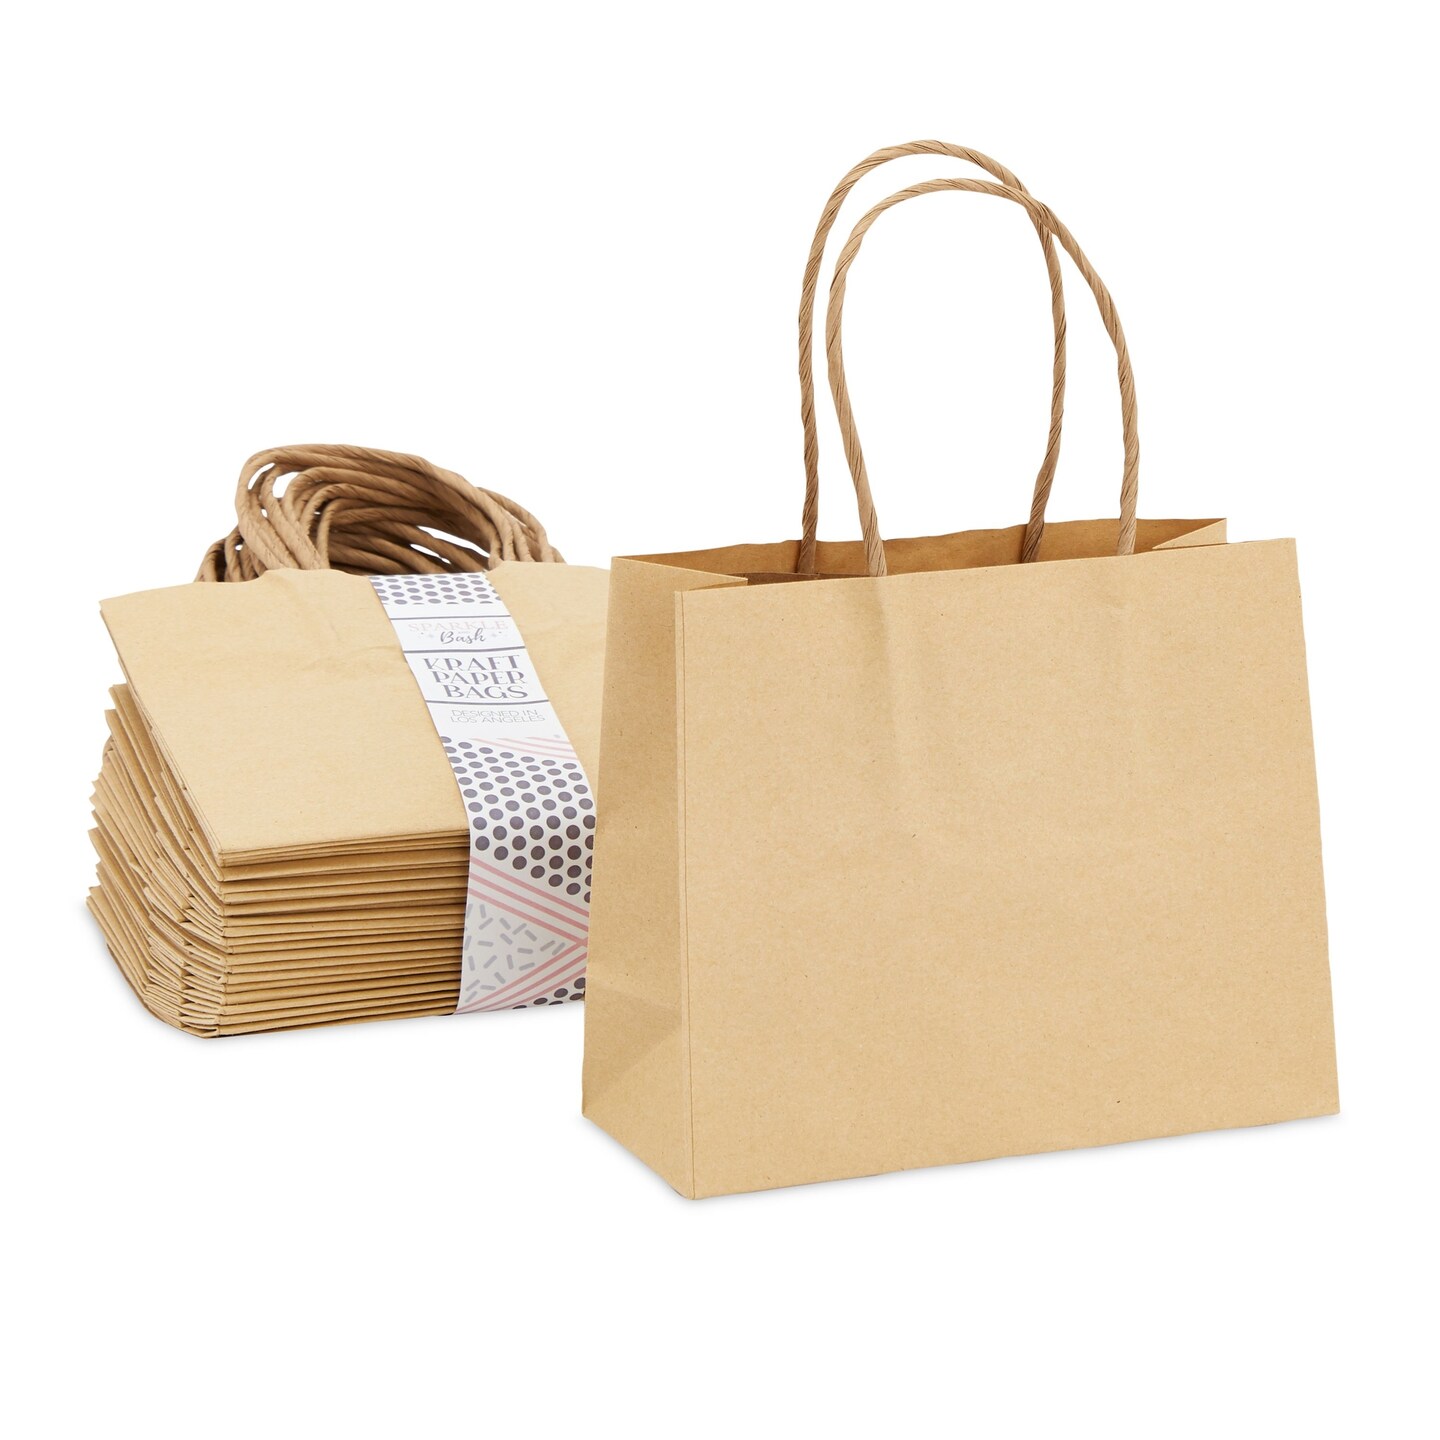 BagDream 100Pcs Paper Gift Bags 8x4.25x10.5 Brown Kraft Paper Bags with  Handles Shopping Bags Bulk Medium Size for Retail Merchandise, Grocery -  Walmart.com